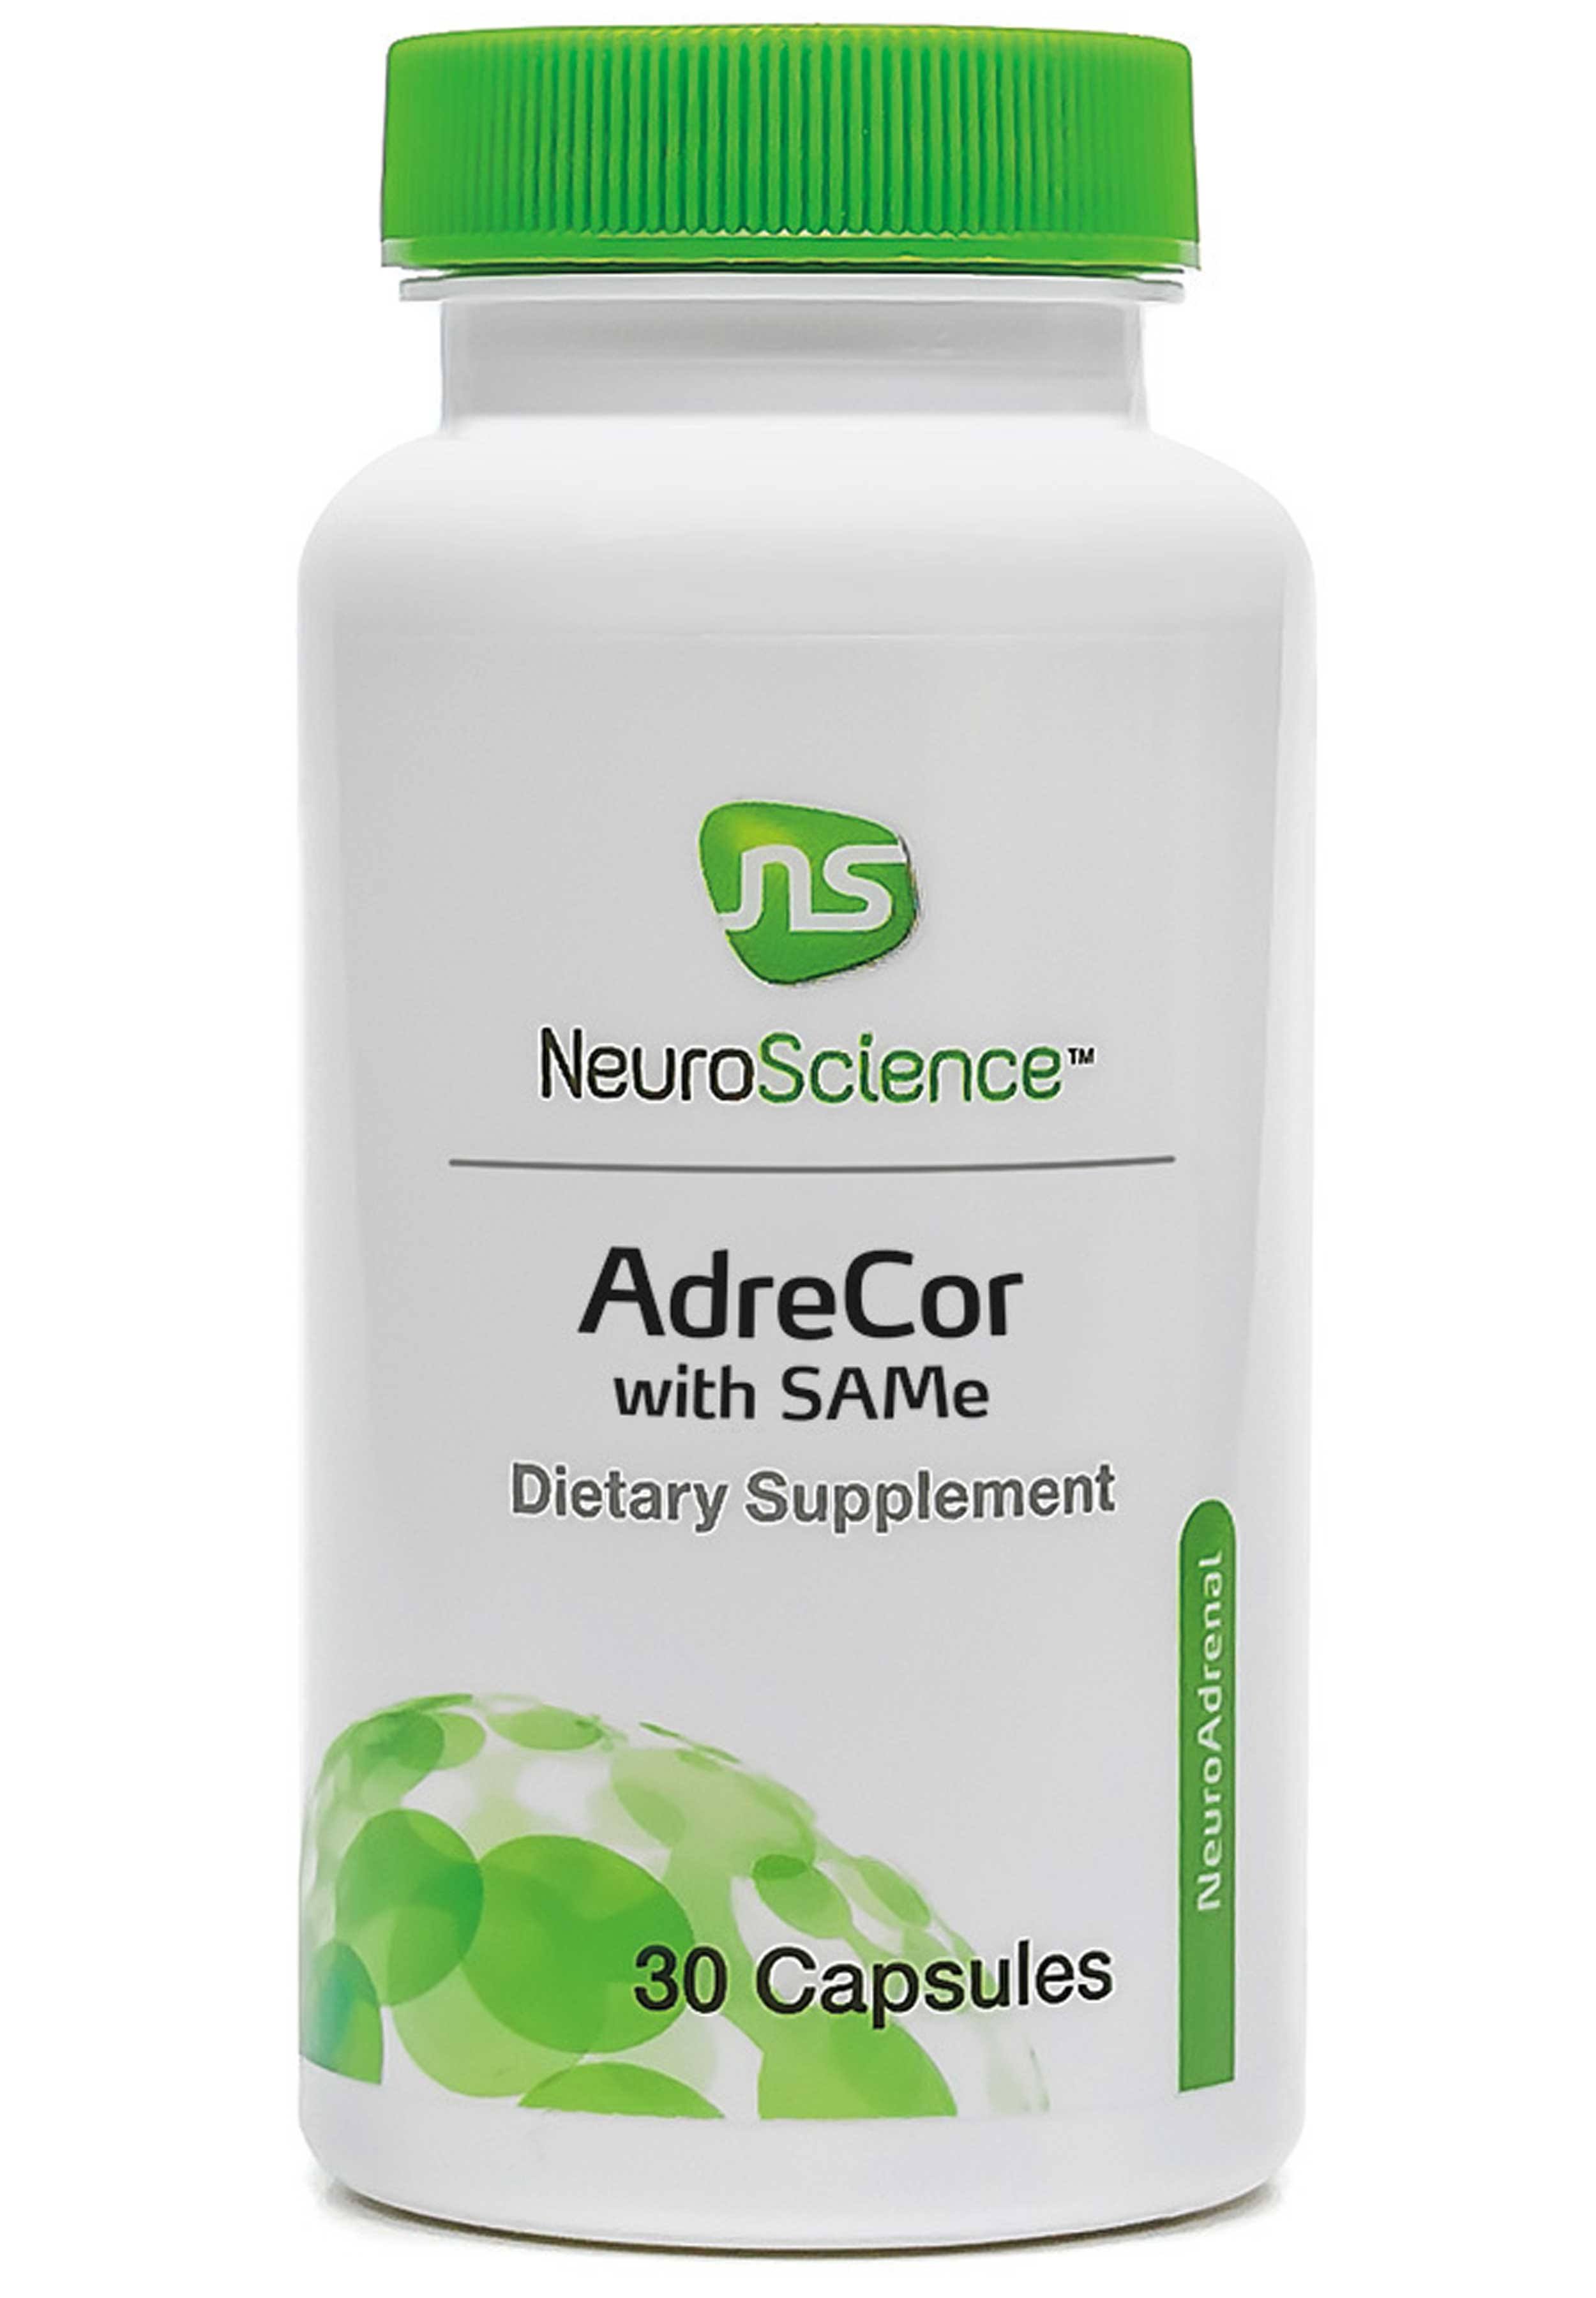 NeuroScience - AdreCor with SAMe - 30 Capsules